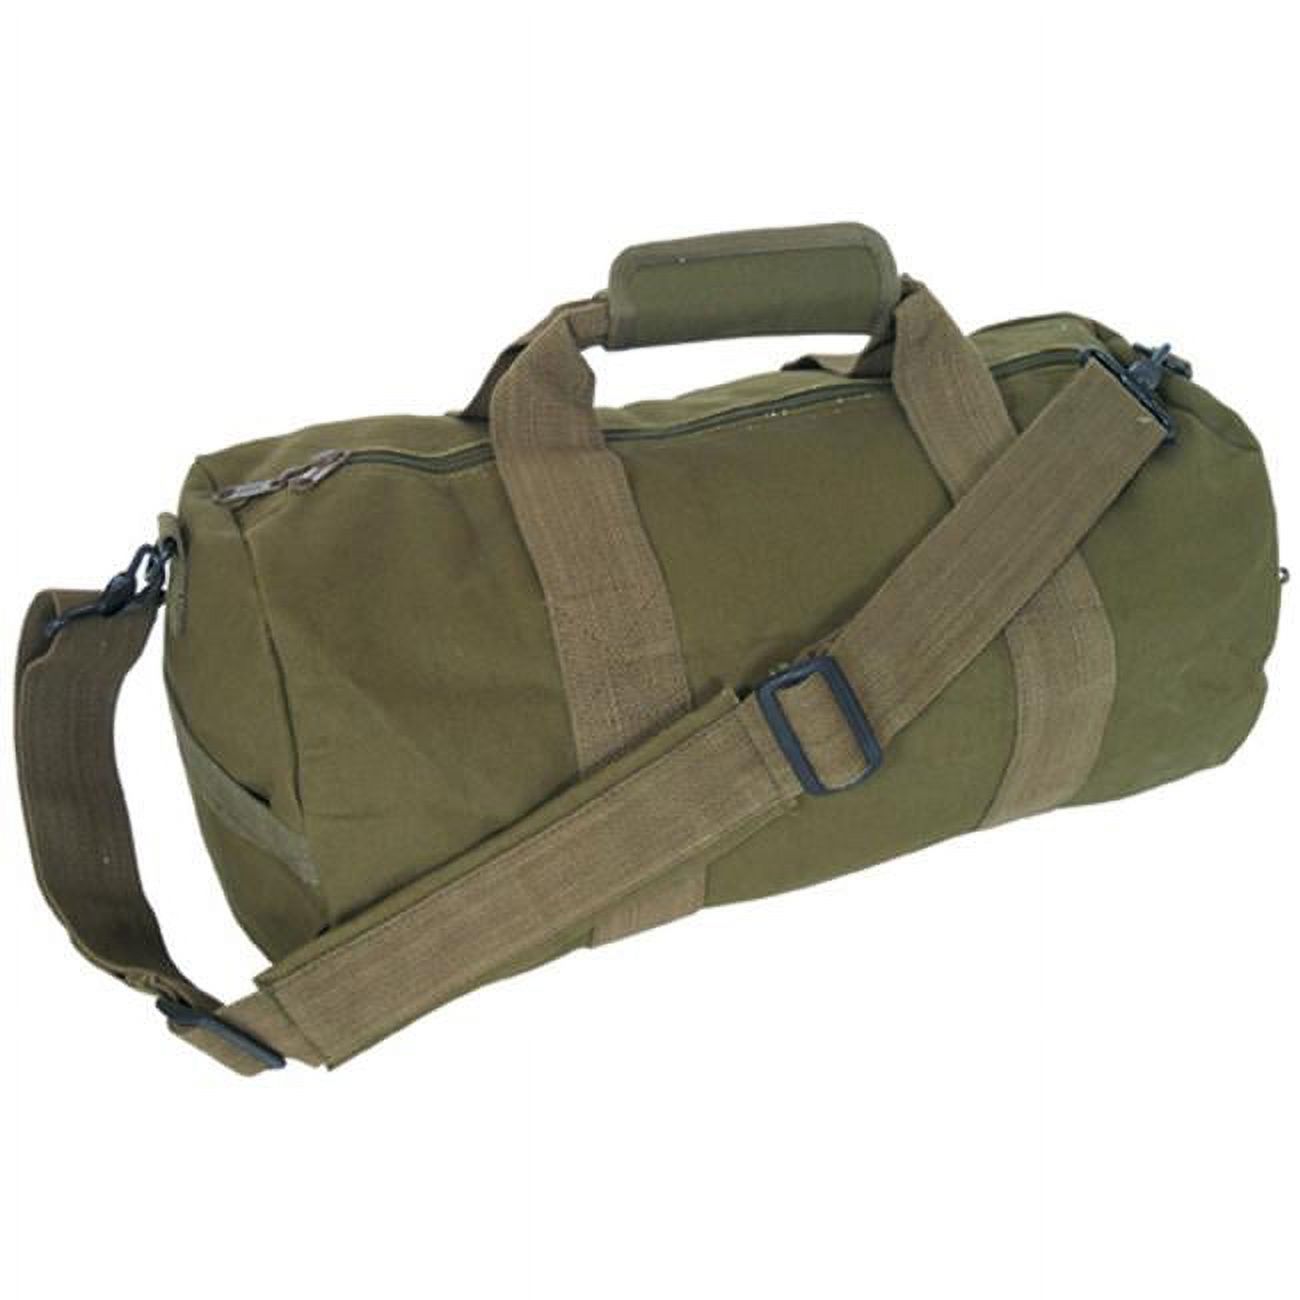 Roll Bag (12'' x 24'') - image 1 of 1